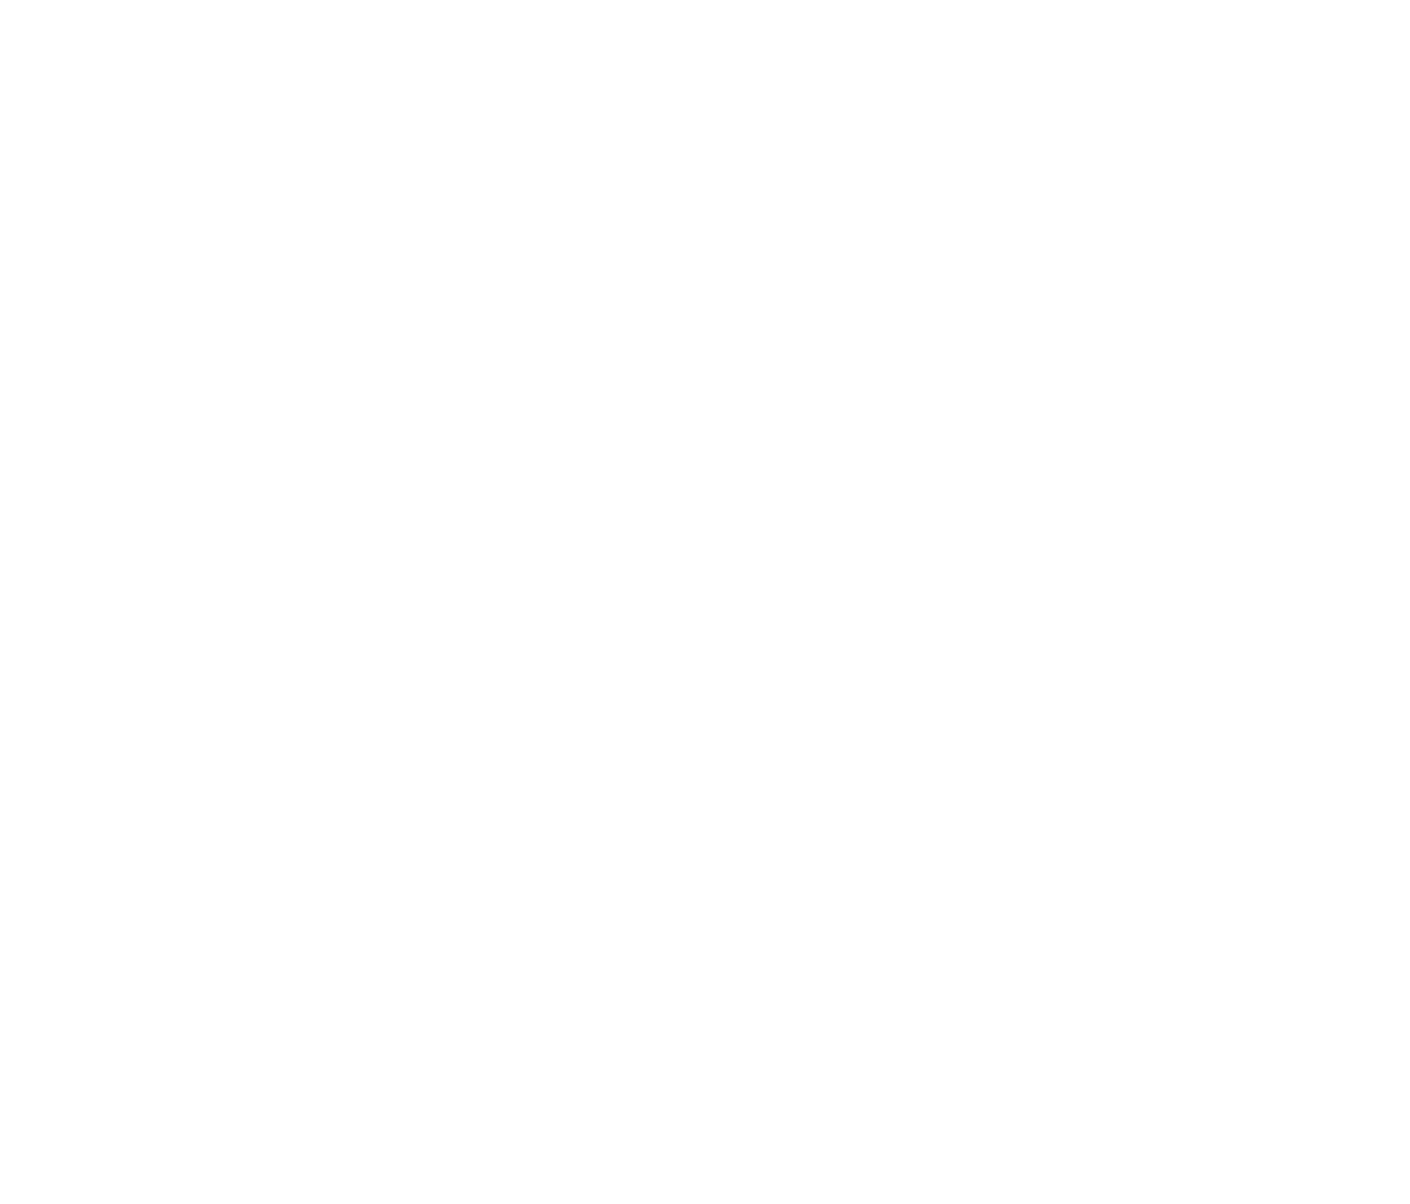 Muddy Stilettos Awards 2022 – Outstanding Pastoral Care